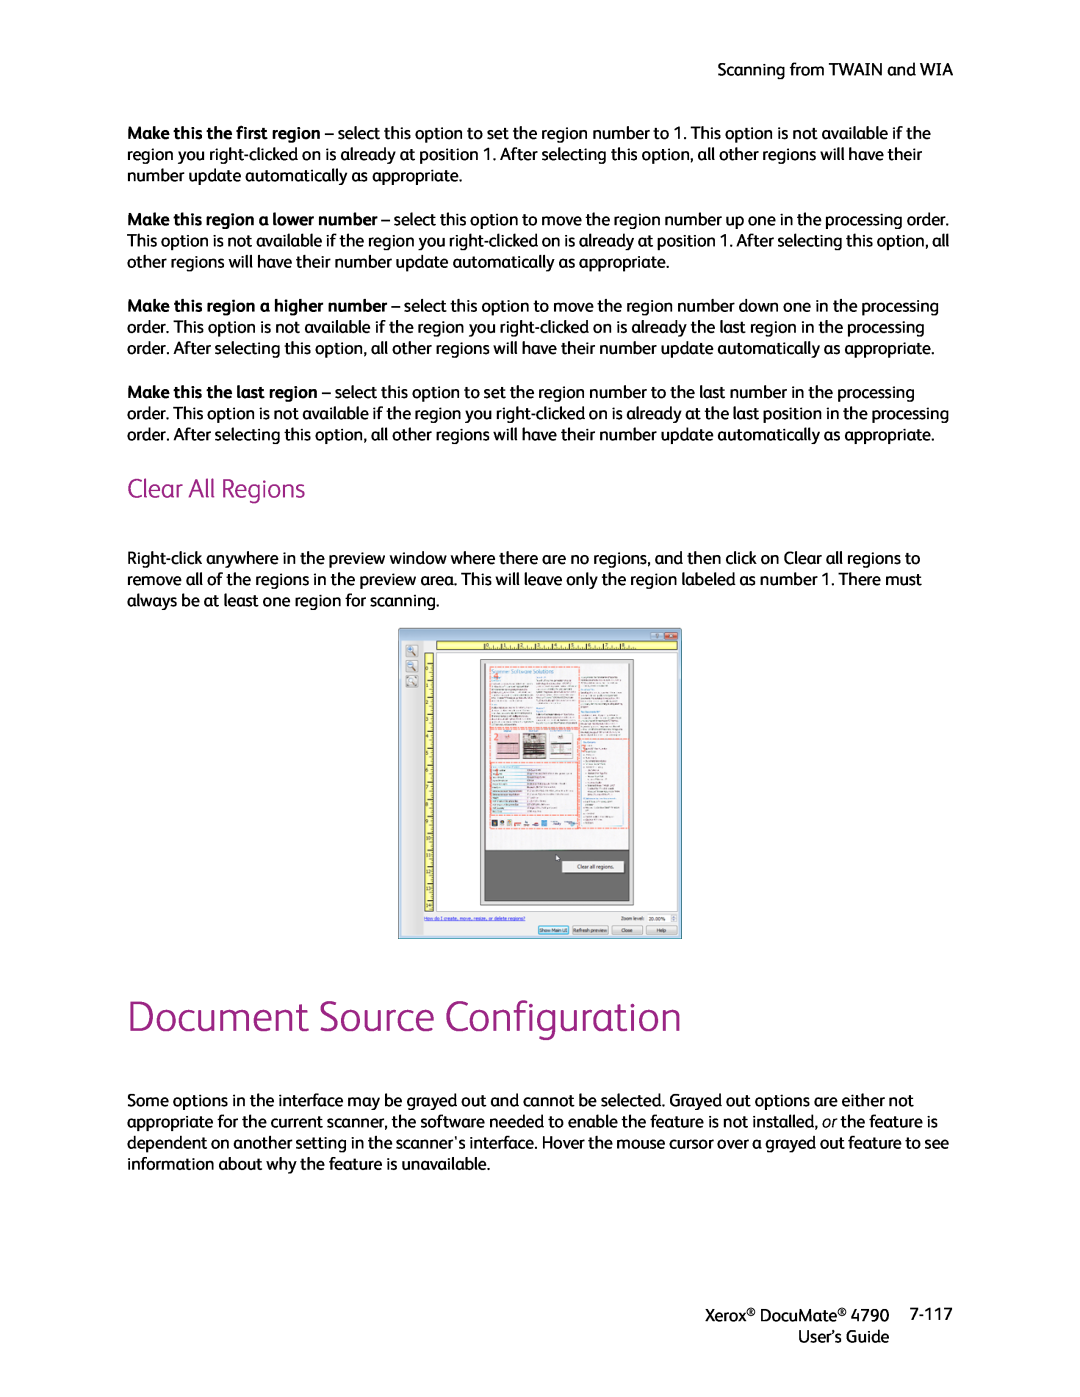 Xerox xerox documate manual Document Source Configuration, Clear All Regions 